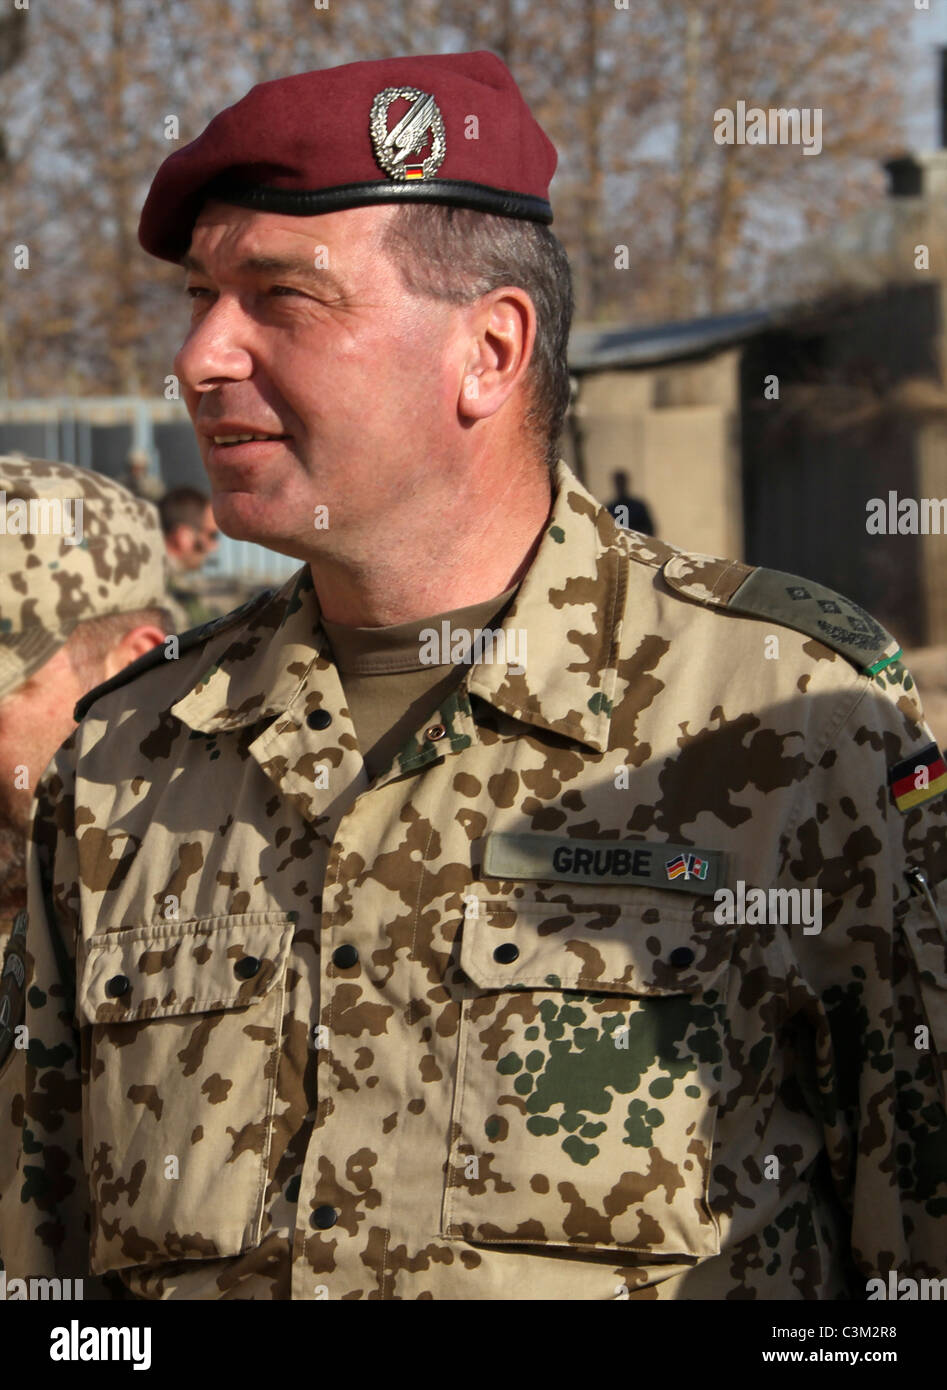 grube, commandant duitse leger in Kunduz, afghanistan. Stock Photo